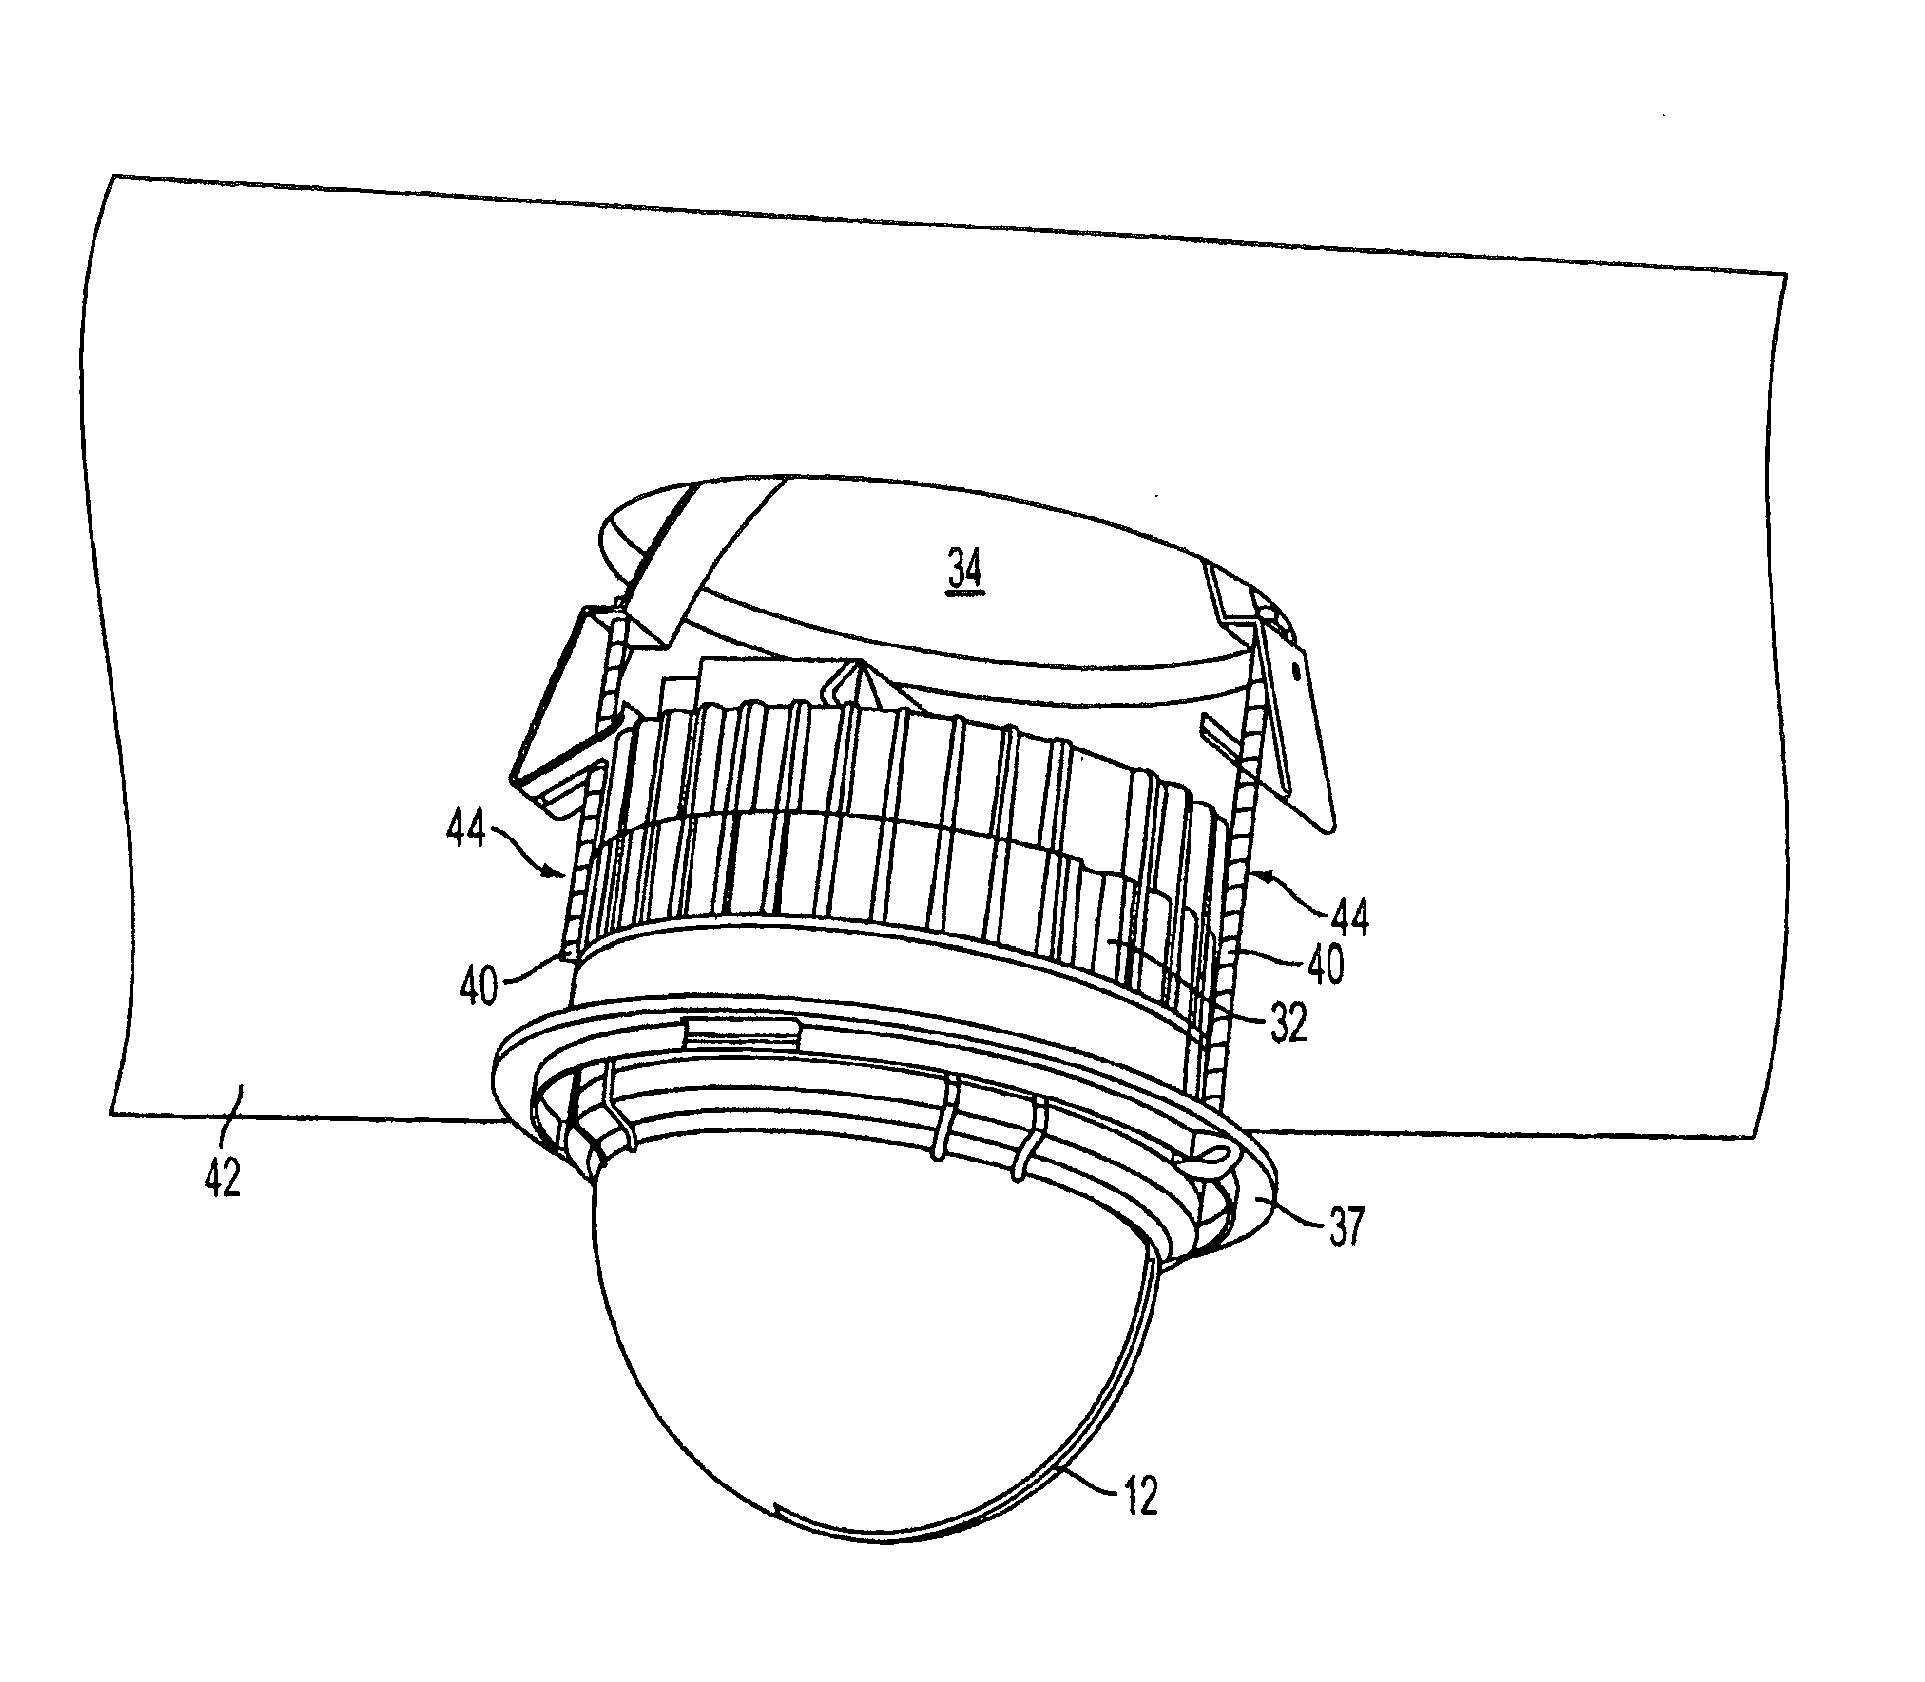 Apparatus for mounting a surveillance camera